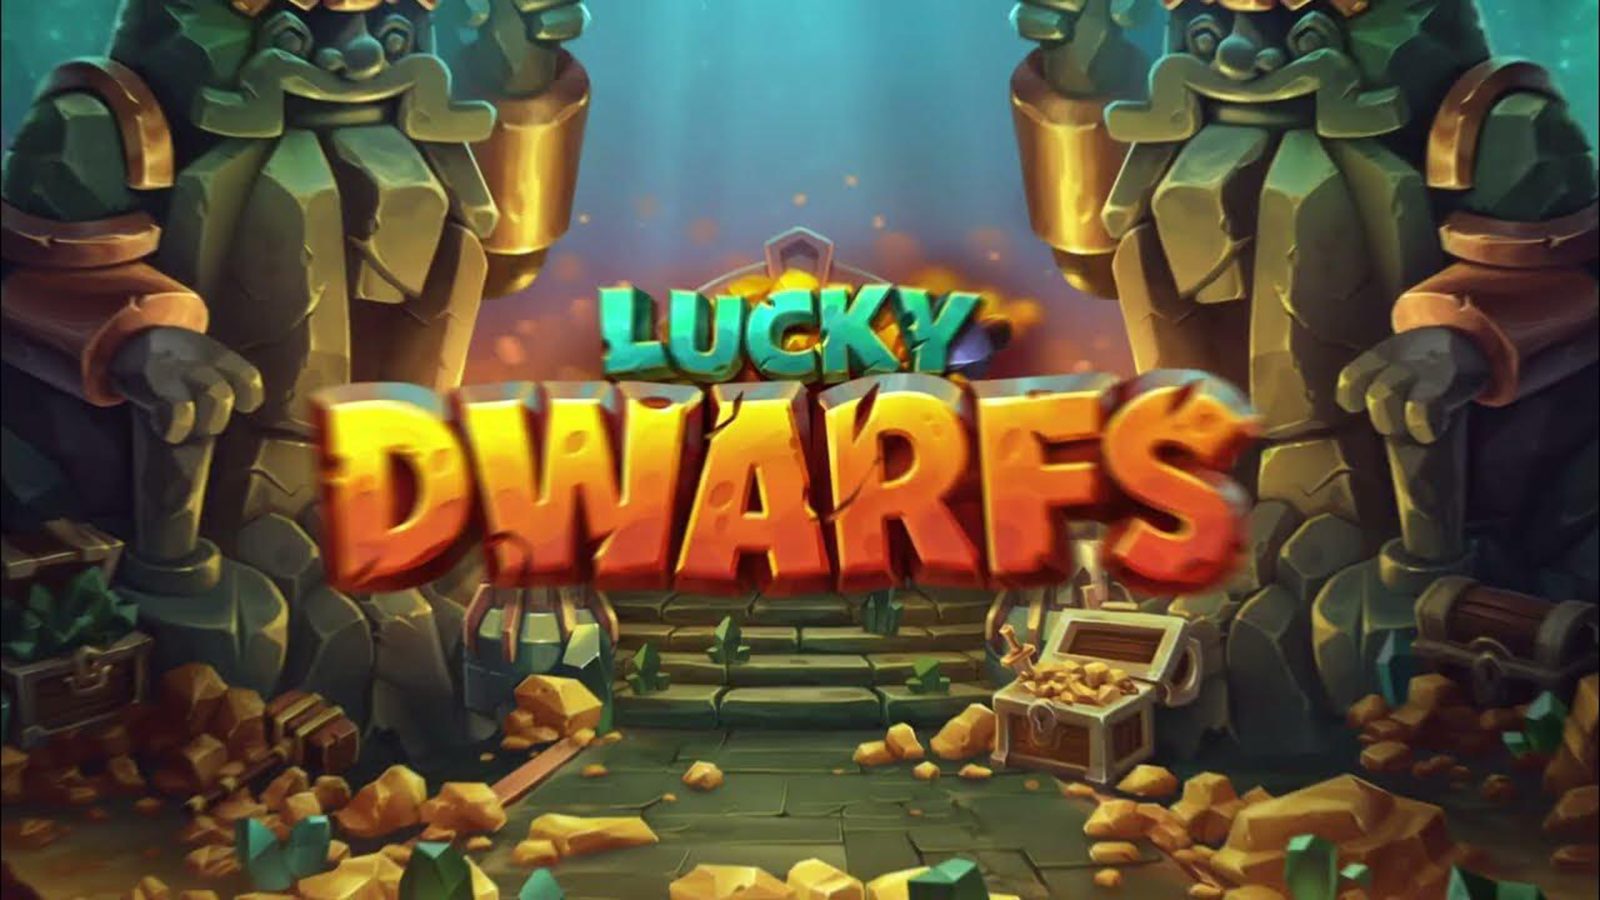 ELA Games Unveils Lucky Dwarfs